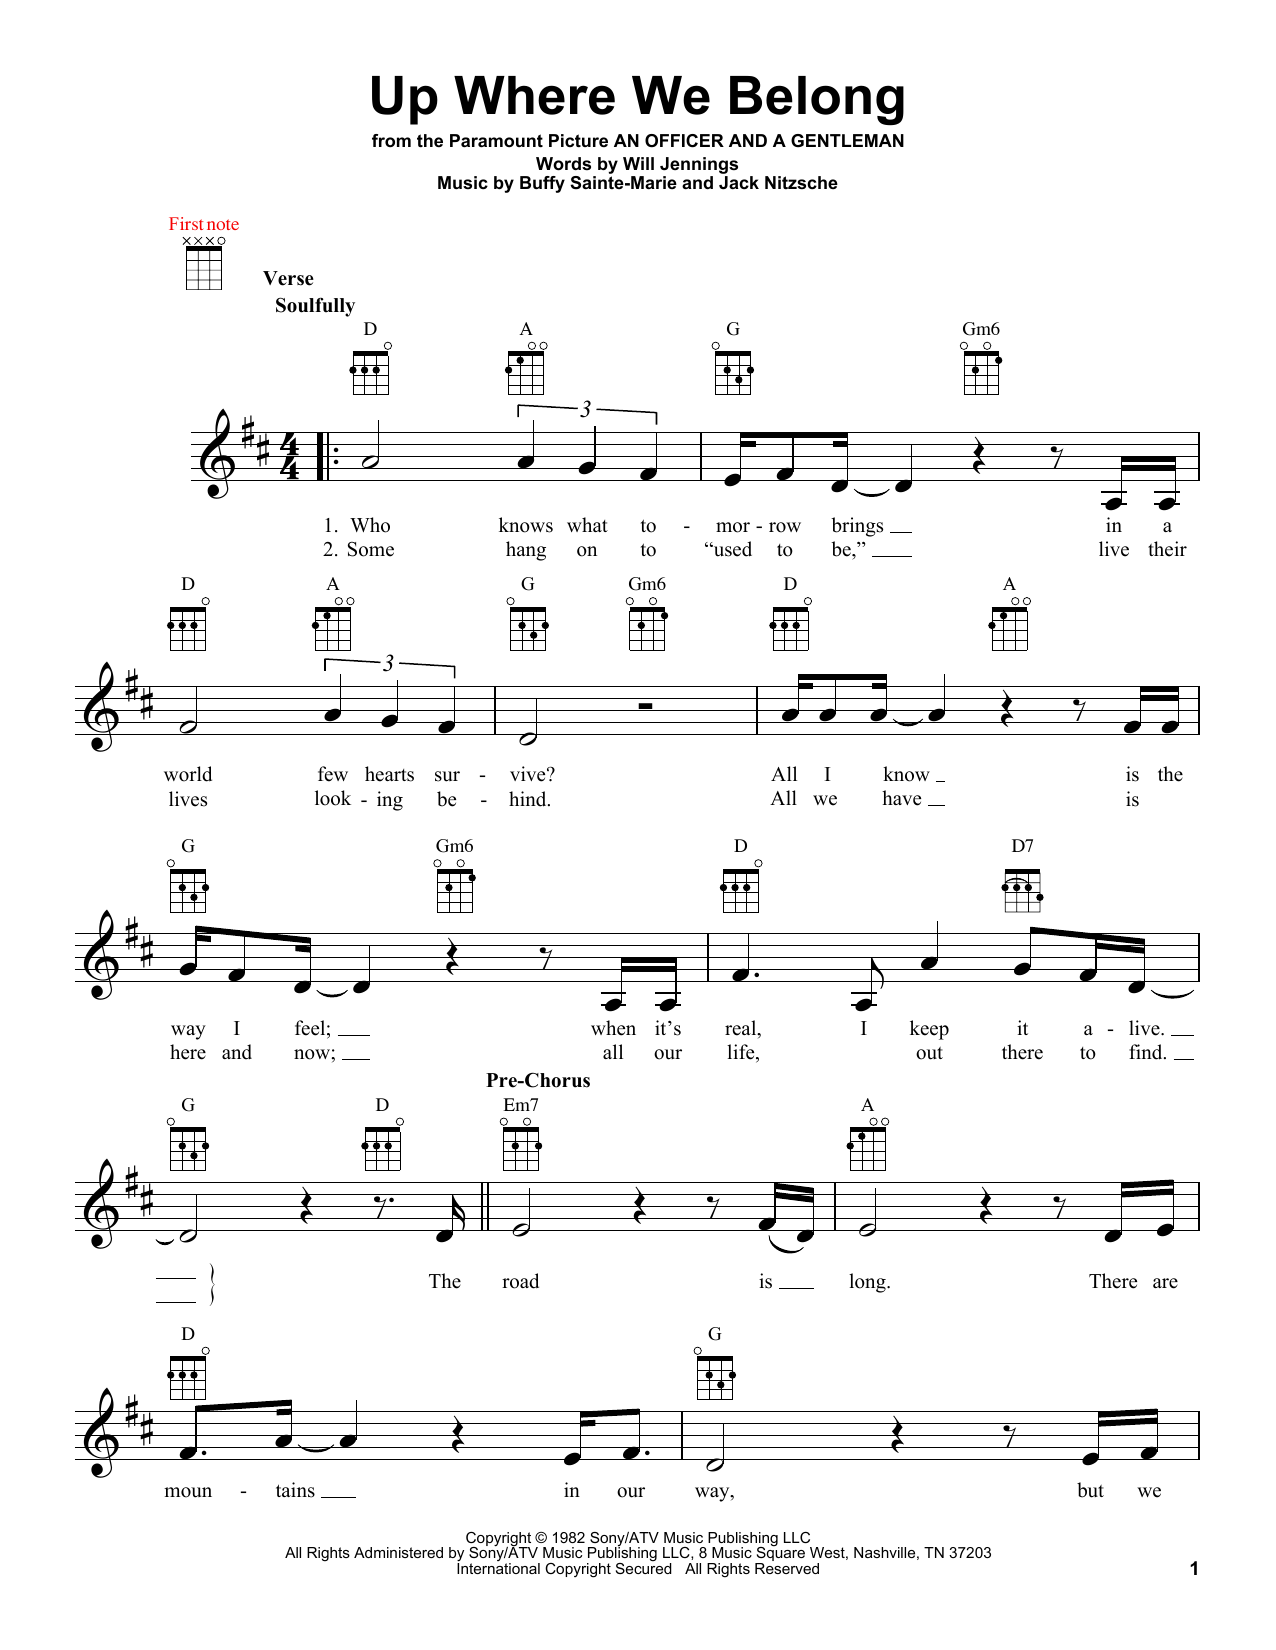 Joe Cocker & Jennifer Warnes Up Where We Belong Sheet Music Notes & Chords for Tenor Saxophone - Download or Print PDF